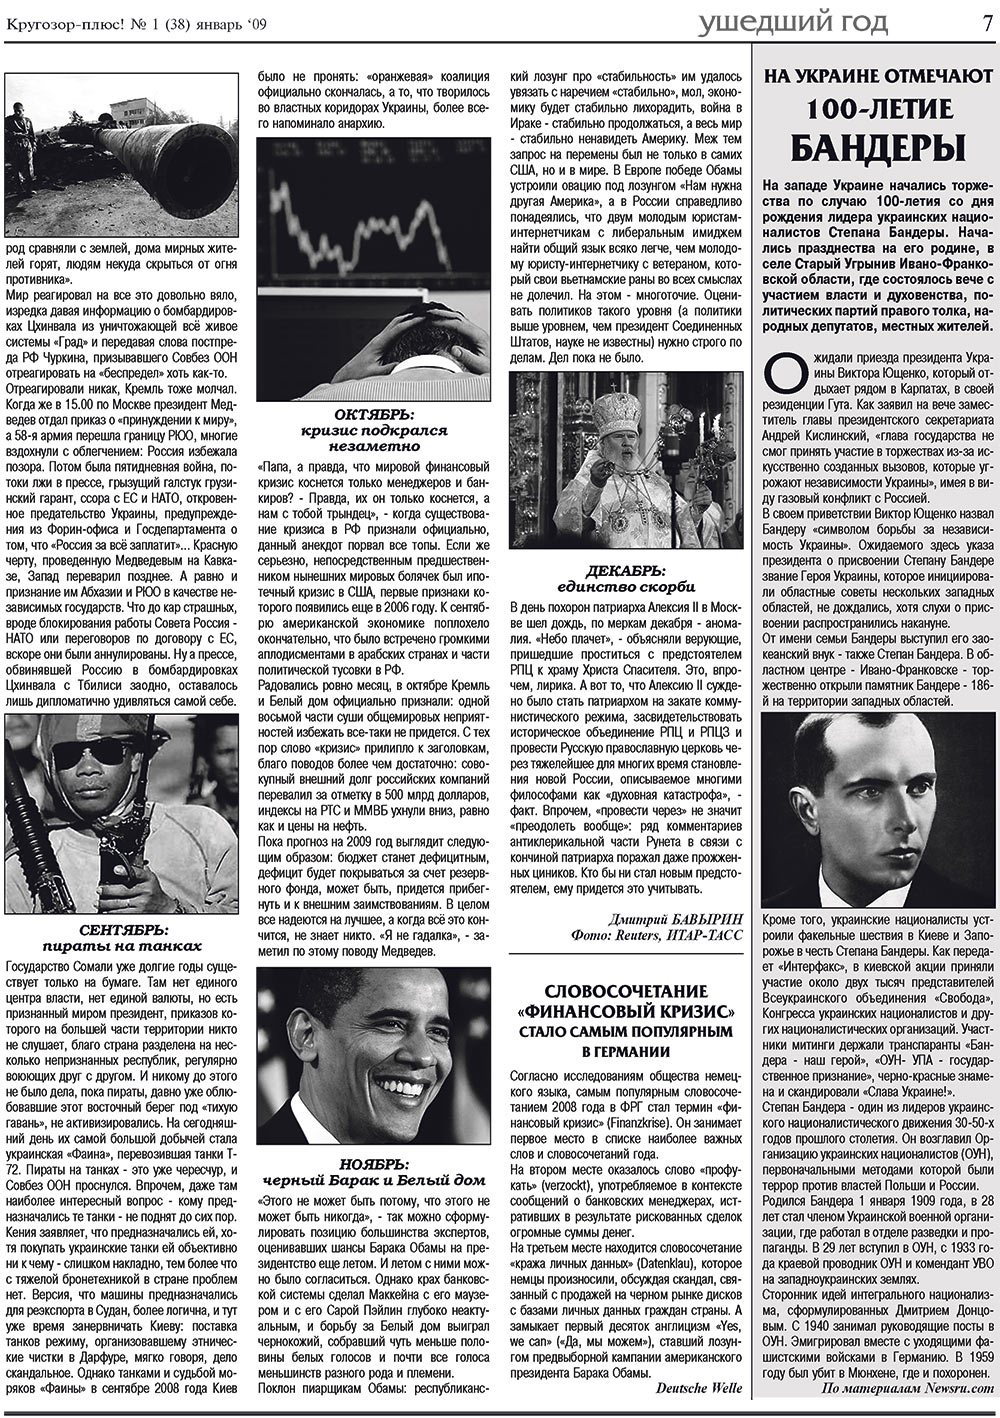 Кругозор плюс! (газета). 2009 год, номер 1, стр. 7